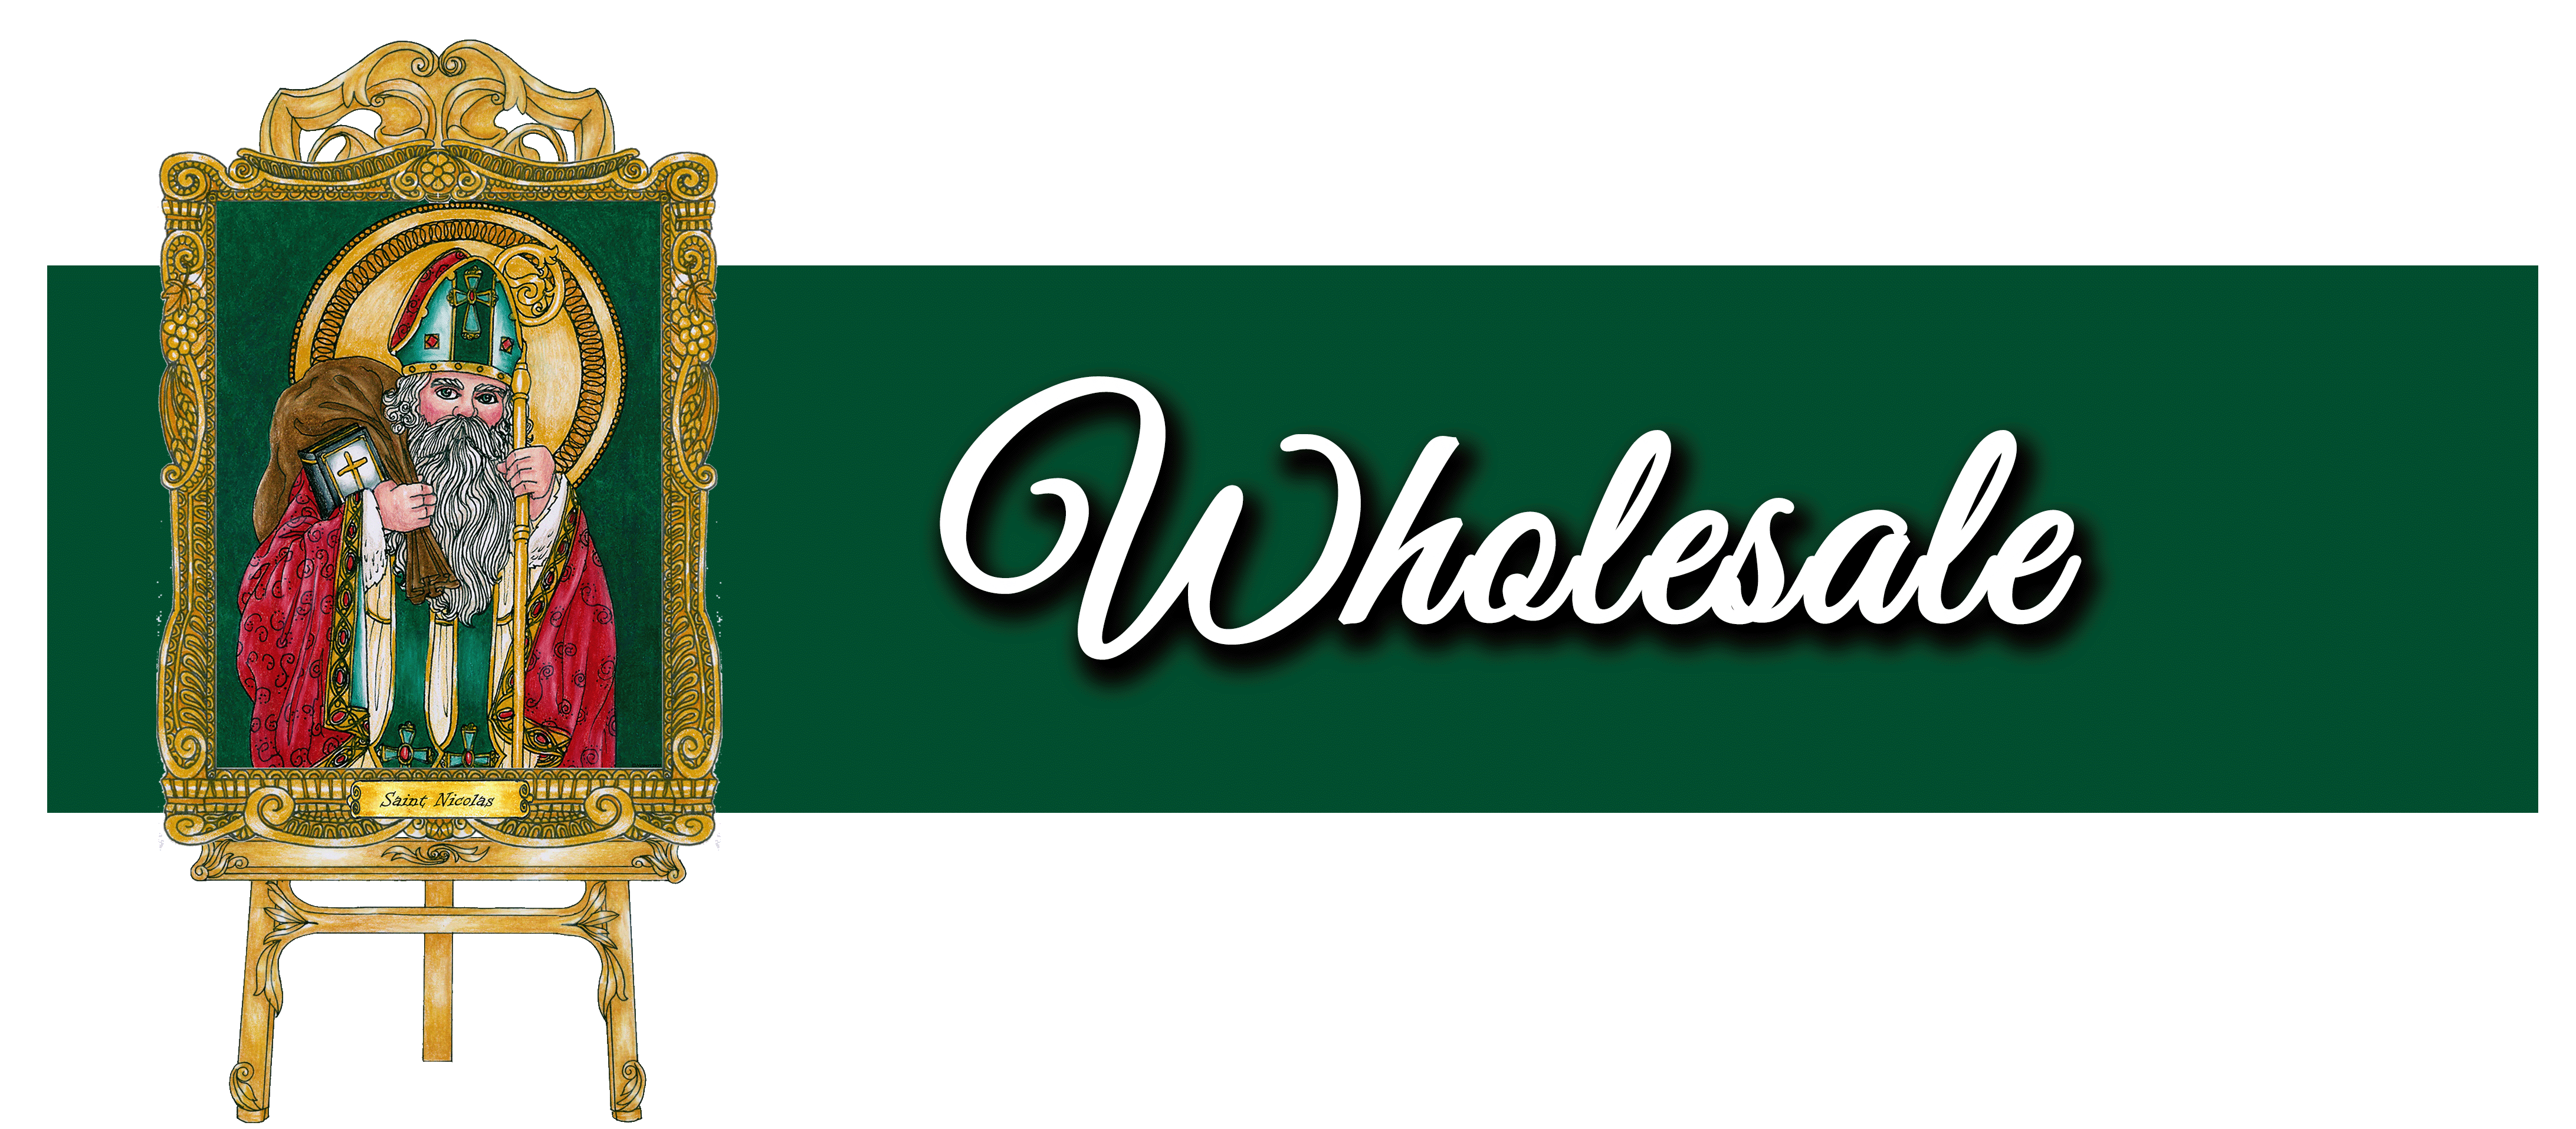 Wholesale Header